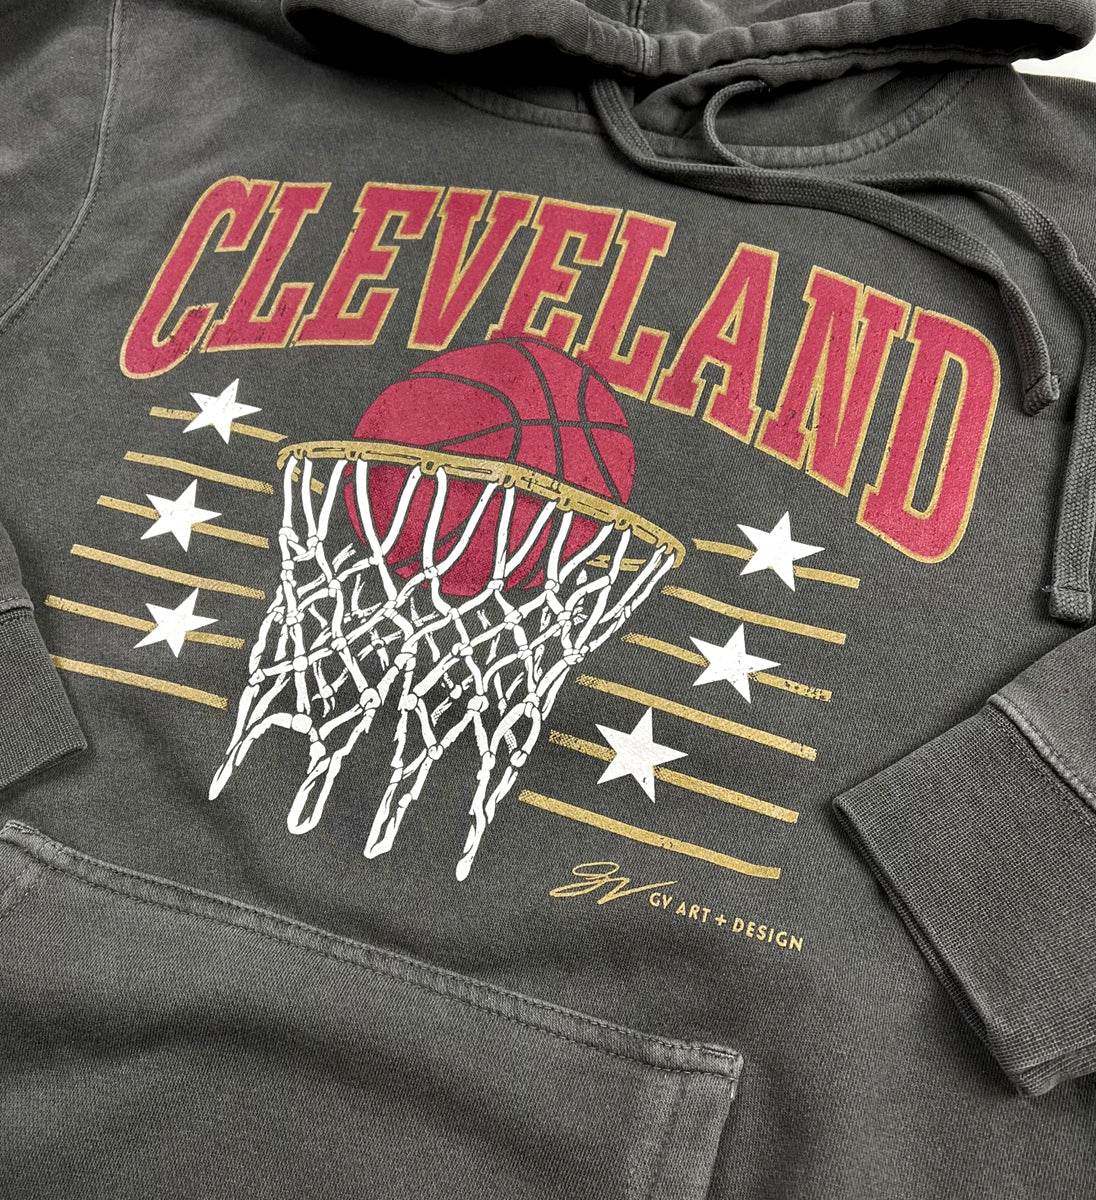 Vintage Cleveland Cavs Sweatshirt